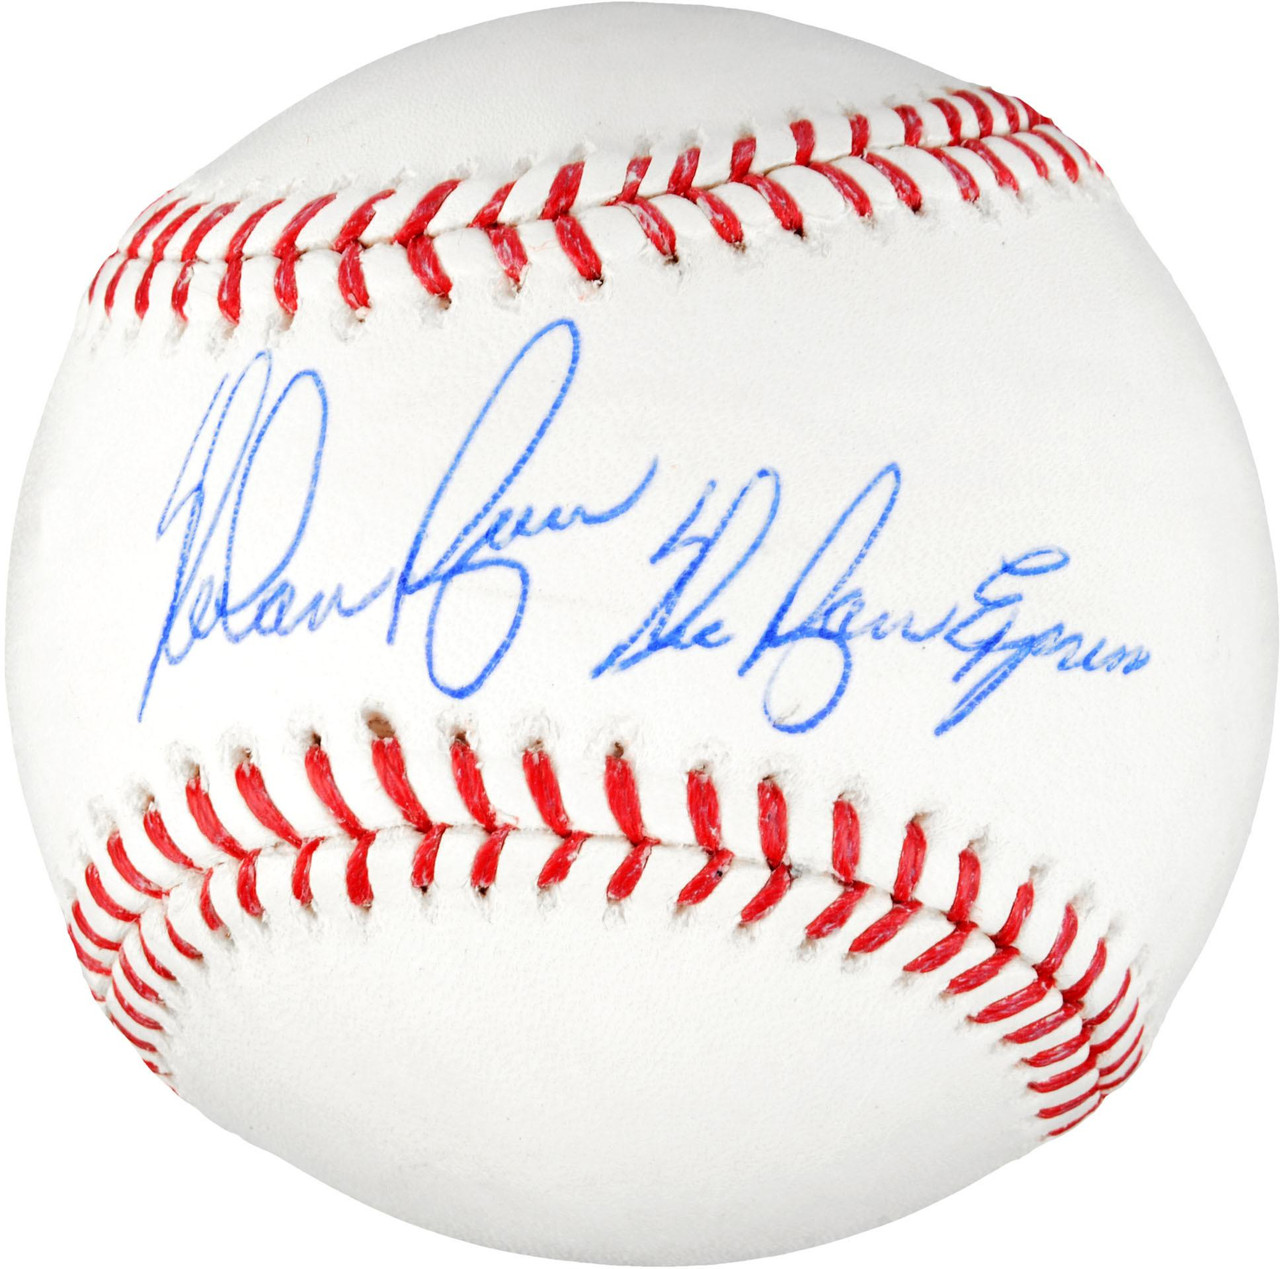 Nolan Ryan Texas Rangers Autographed MLB Baseball with Express Inscription